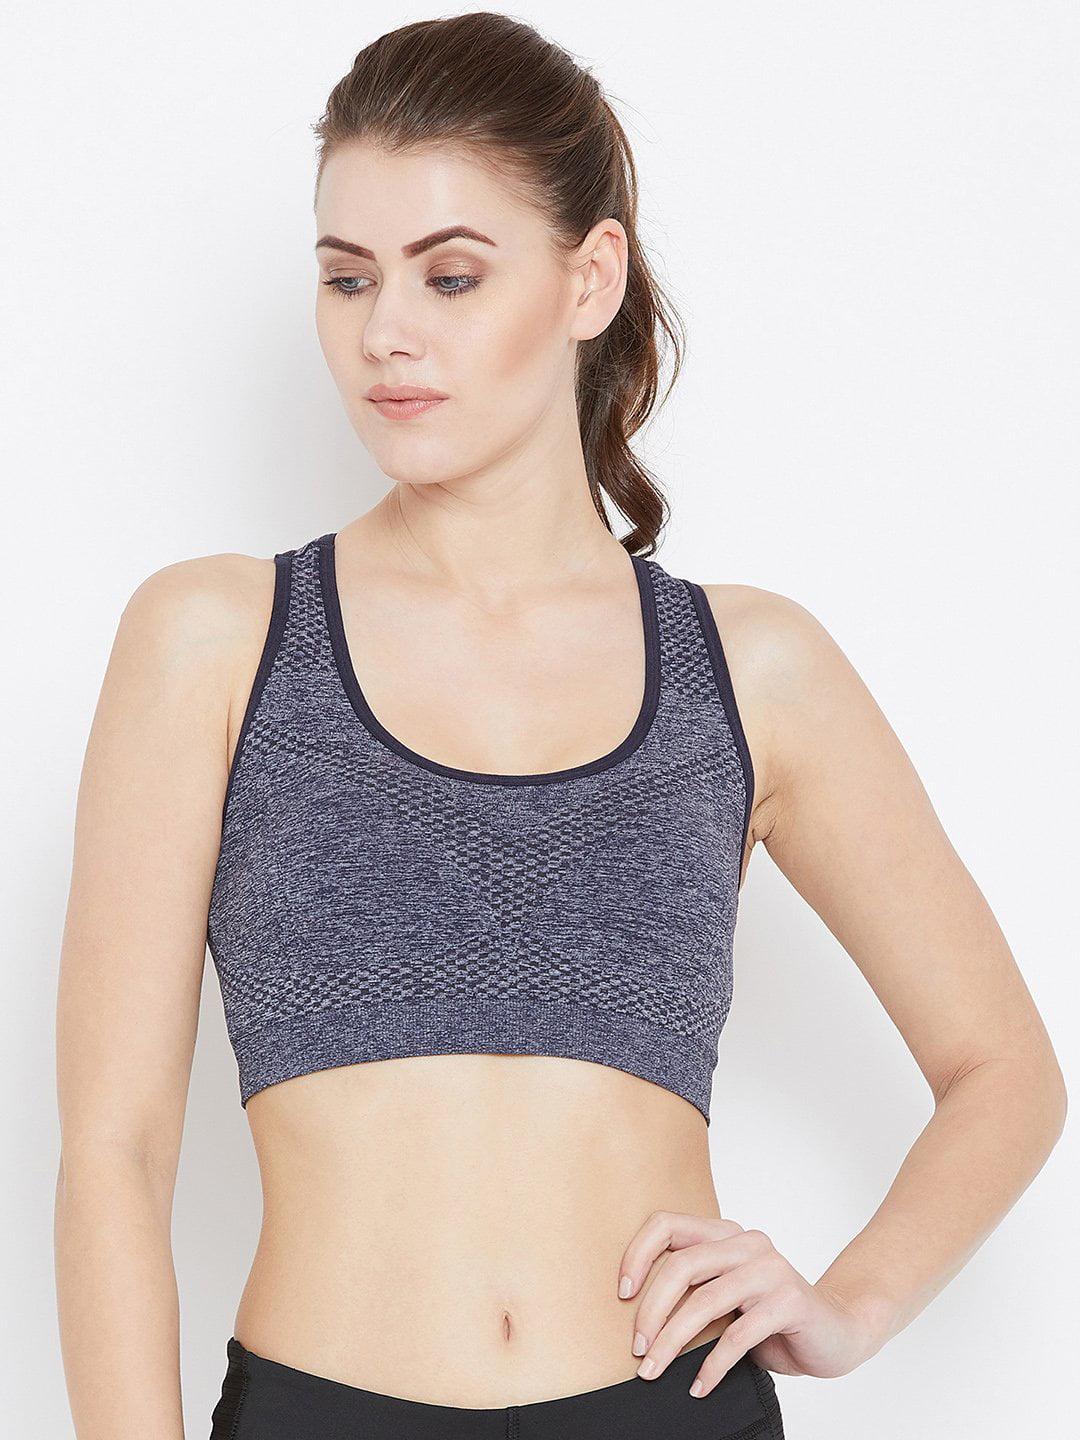 buildup Women Tank Top Shirt Hollow Breathable Underwire Yoga Sport Bra